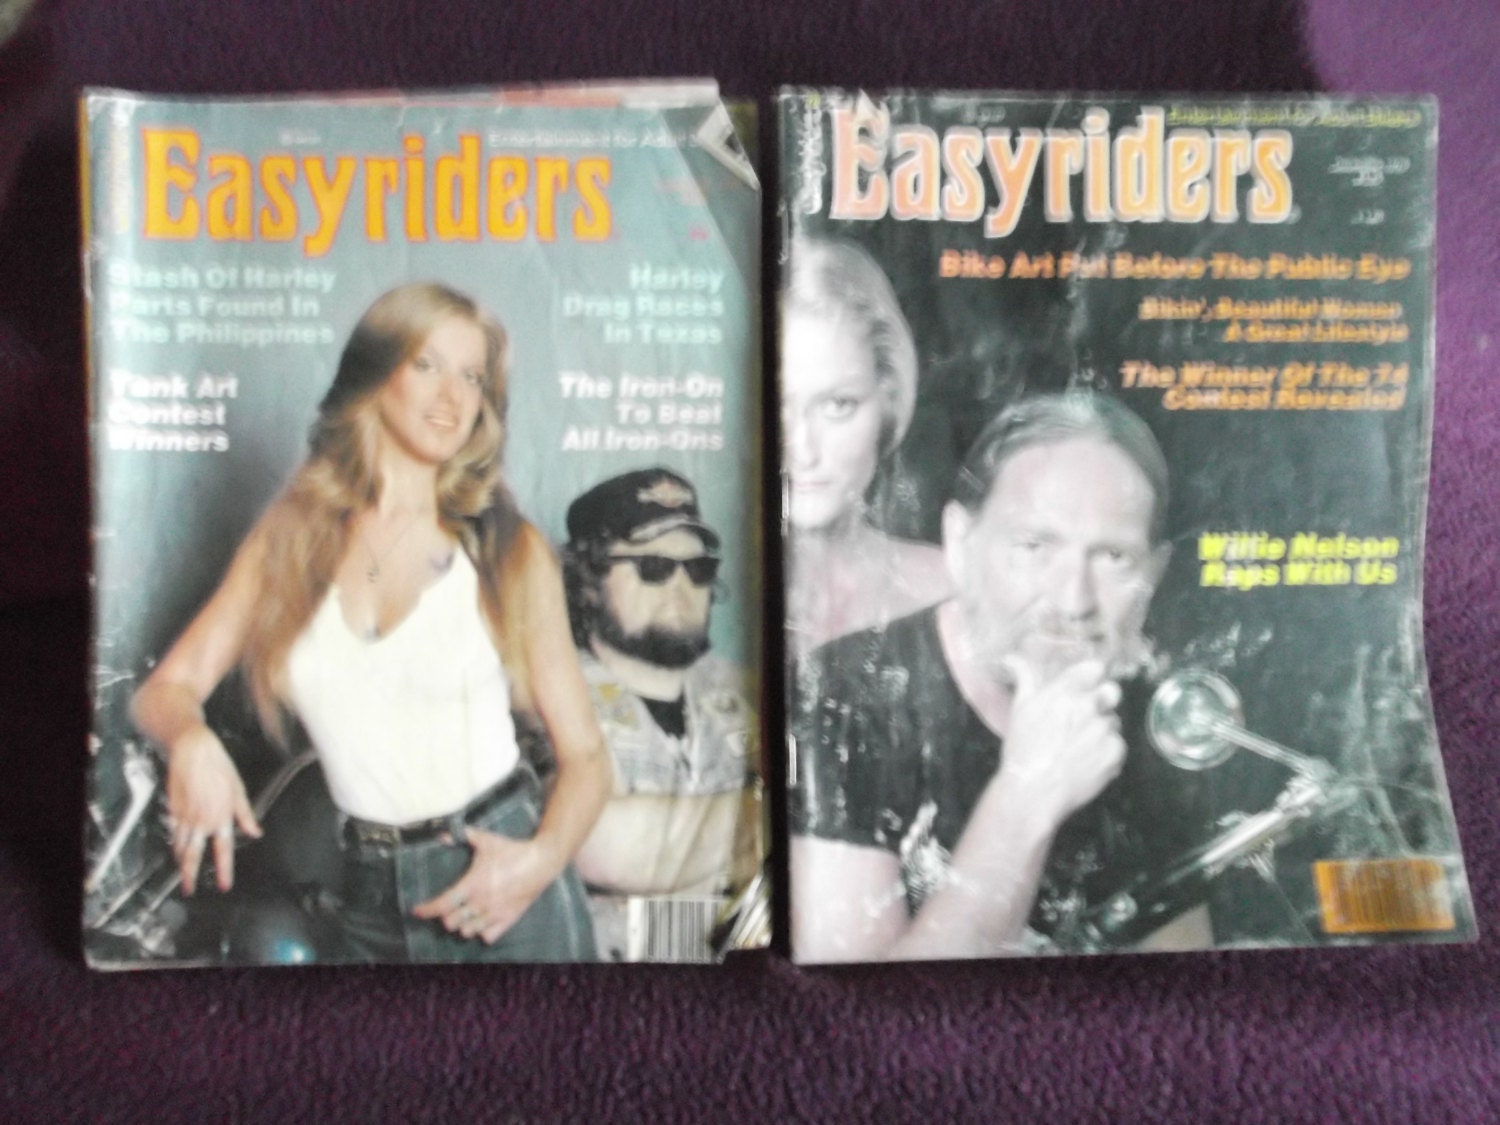 easy rider magazine covers 1970s